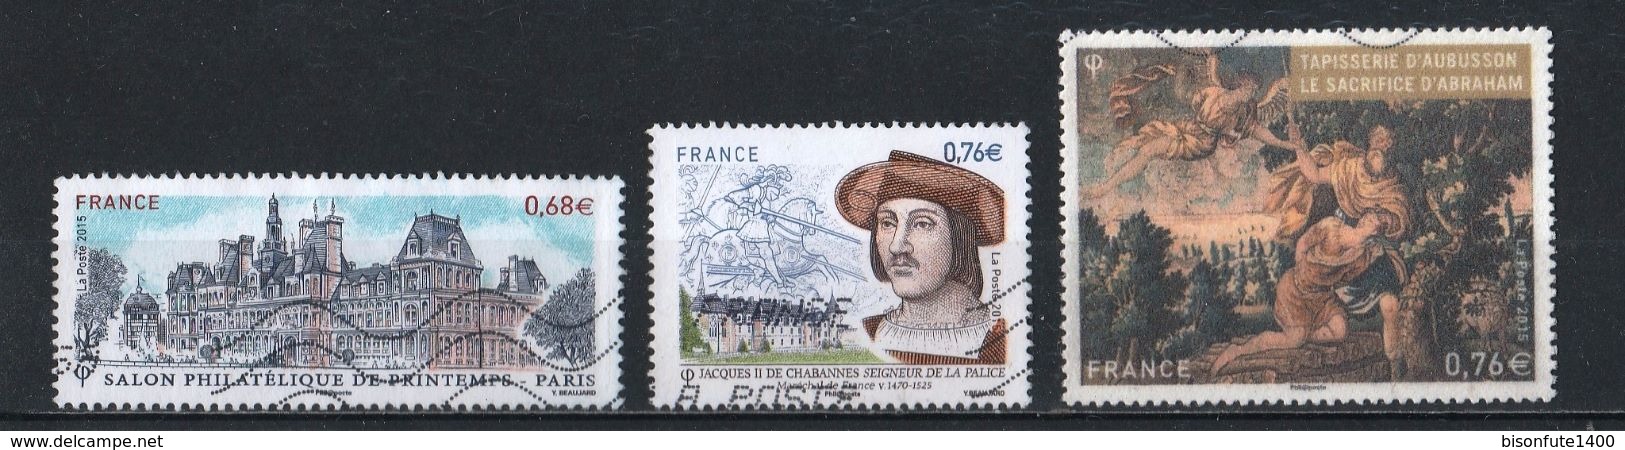 France 2015 : Timbres Yvert & Tellier N° 4932 - 4955 Et 5000 Avec Oblitérations Mécaniques - Used Stamps